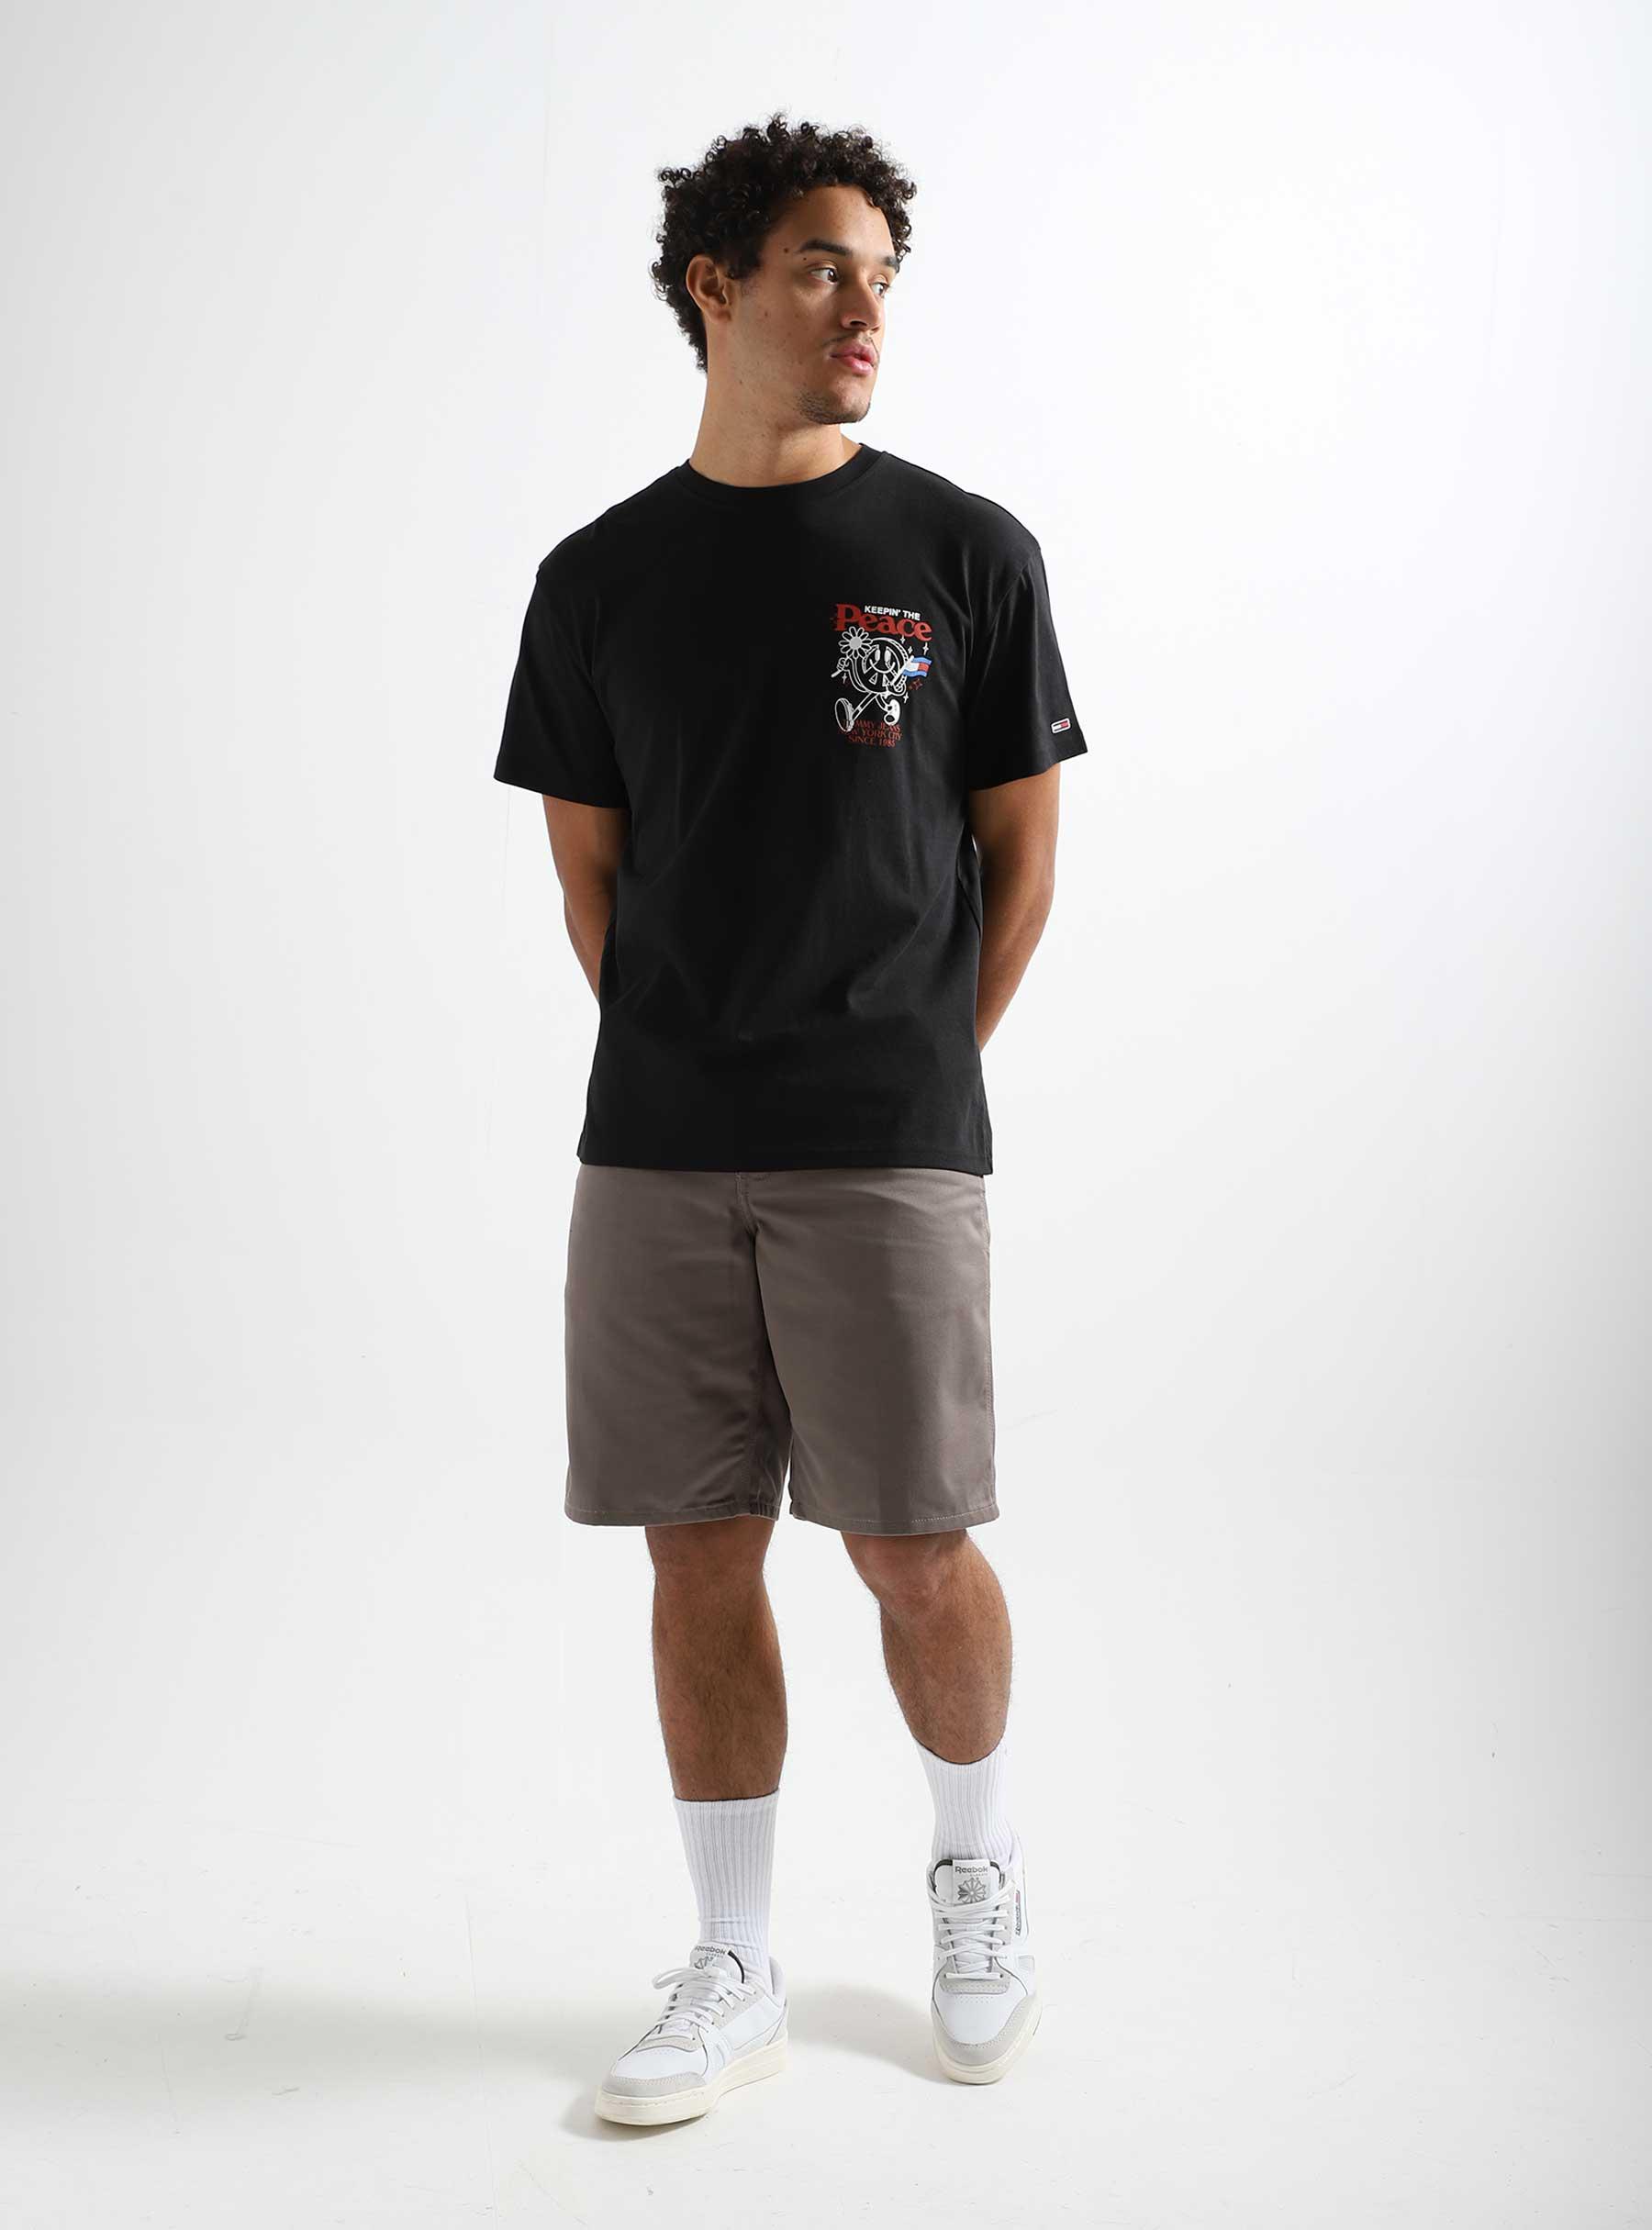 Tommy Jeans TJM Homegrown Smiley T-shirt Black - Freshcotton